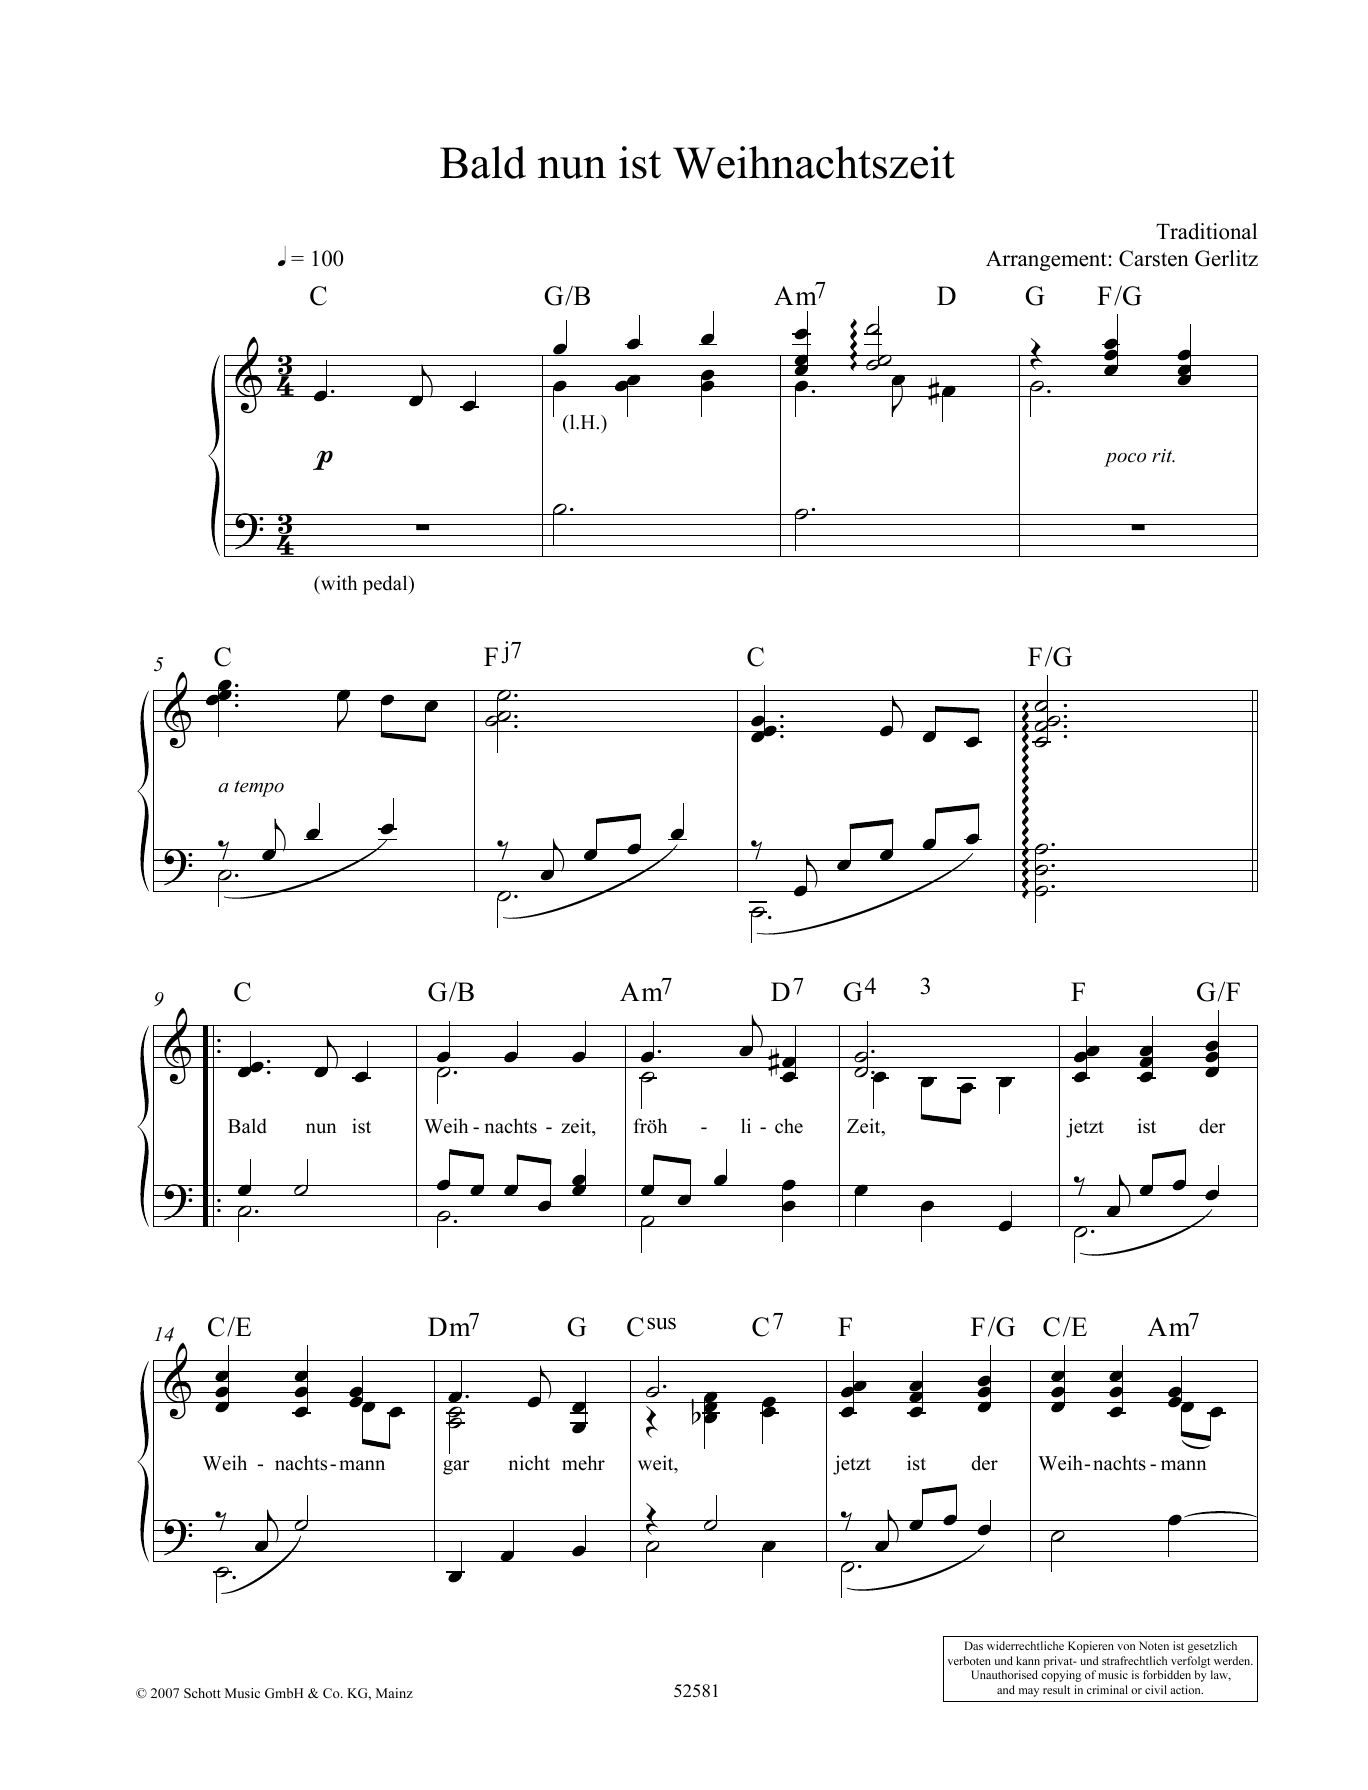 Carsten Gerlitz Bald nun ist Weihnachtszeit Sheet Music Notes & Chords for Piano Solo - Download or Print PDF